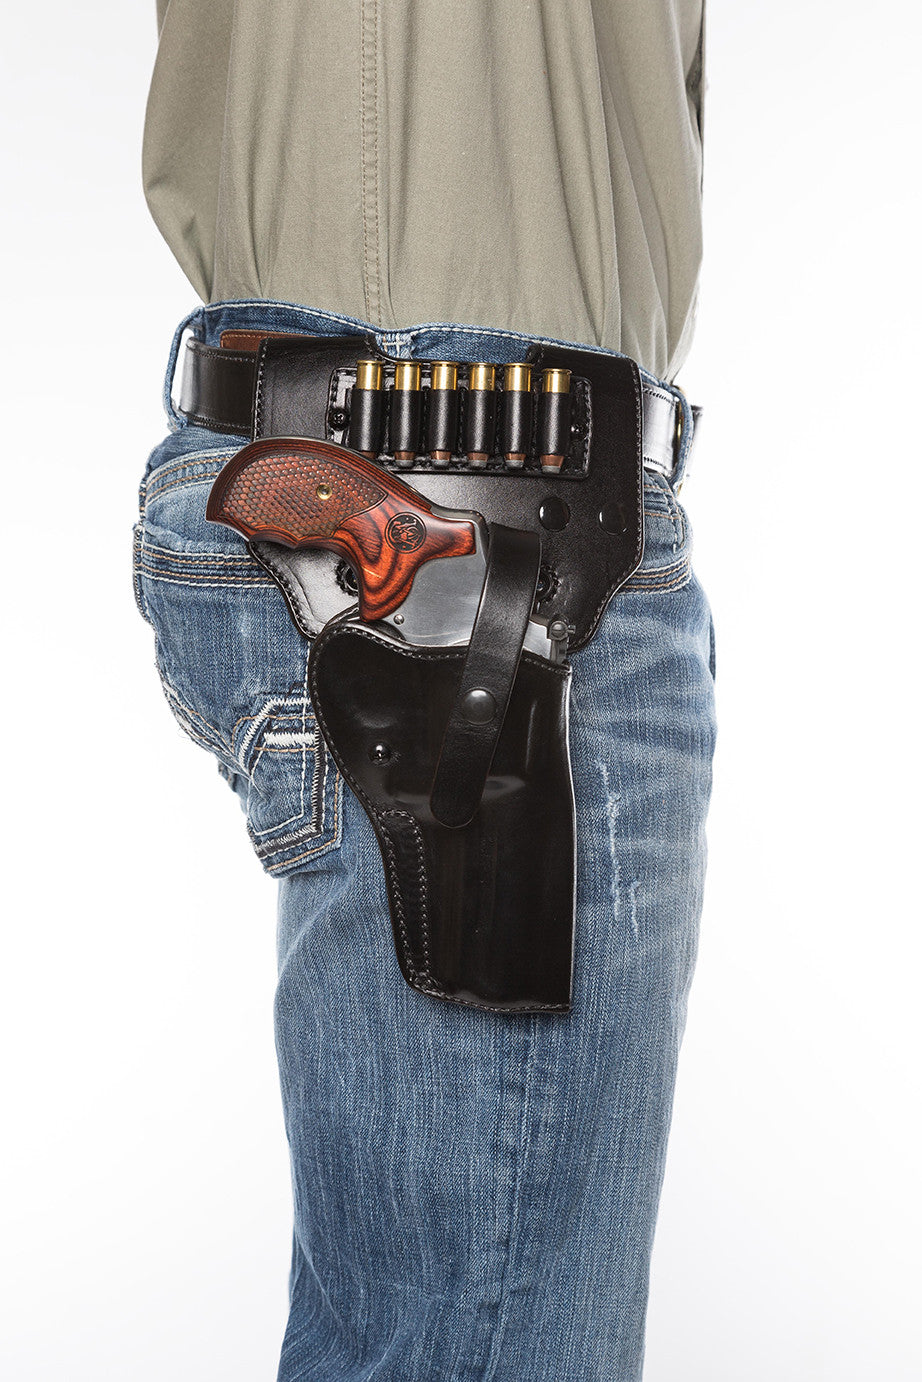 Alaska Hunter Hip Holster, a leather gun holster designed to work